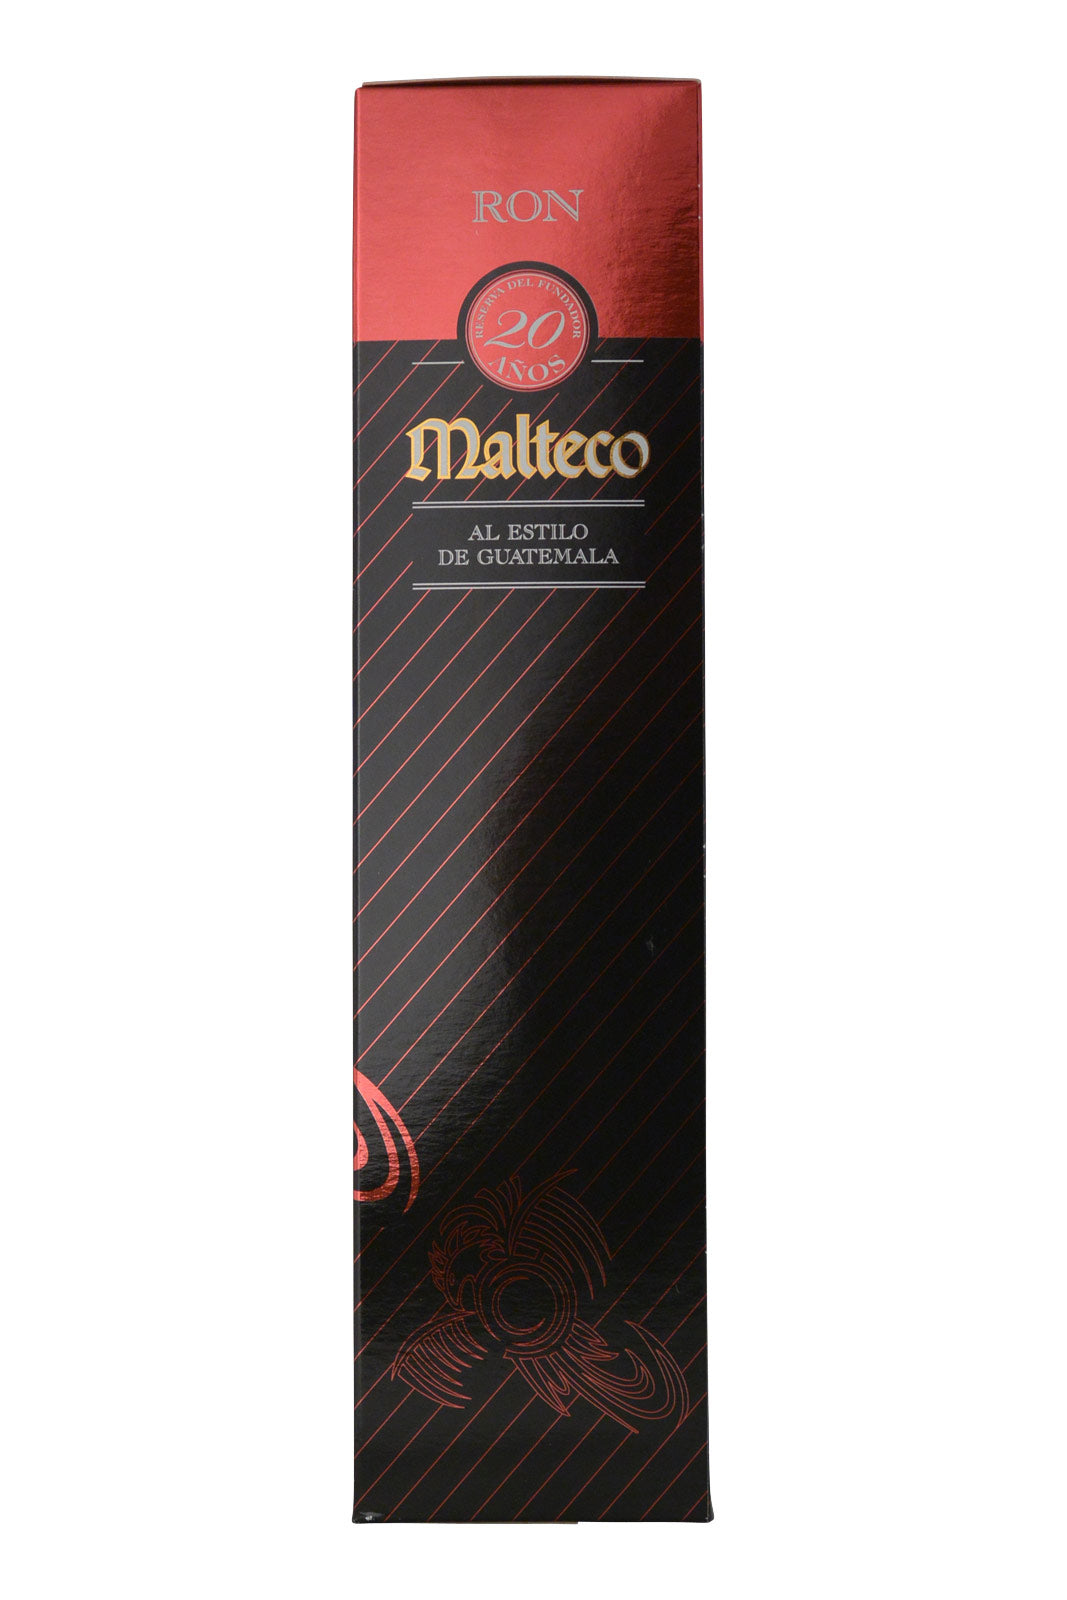 Malteco 20 Year Old